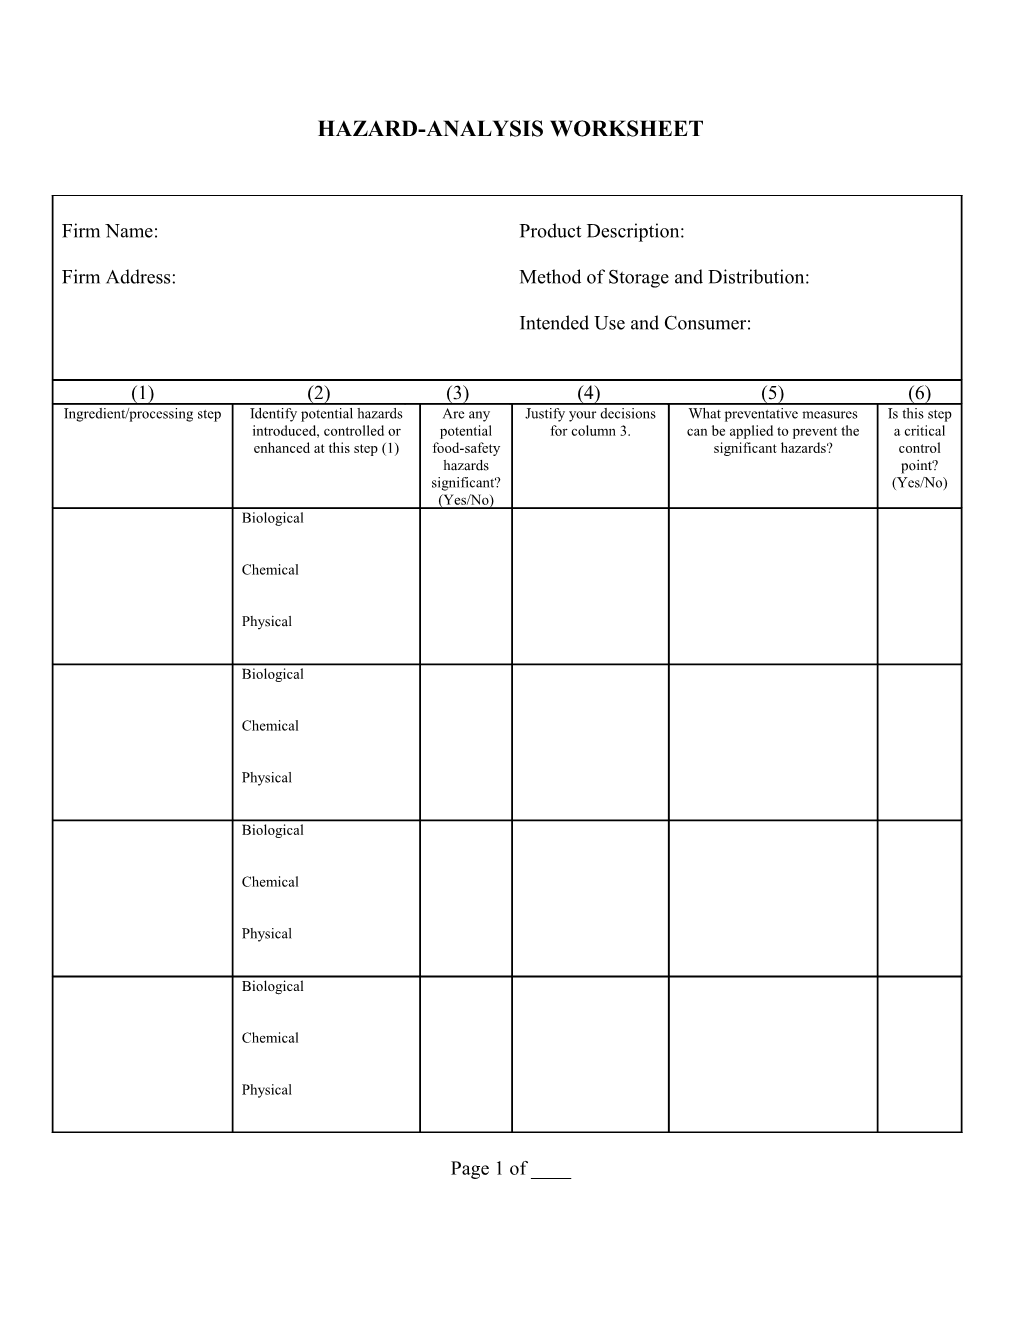 Hazard-Analysis Worksheet s1